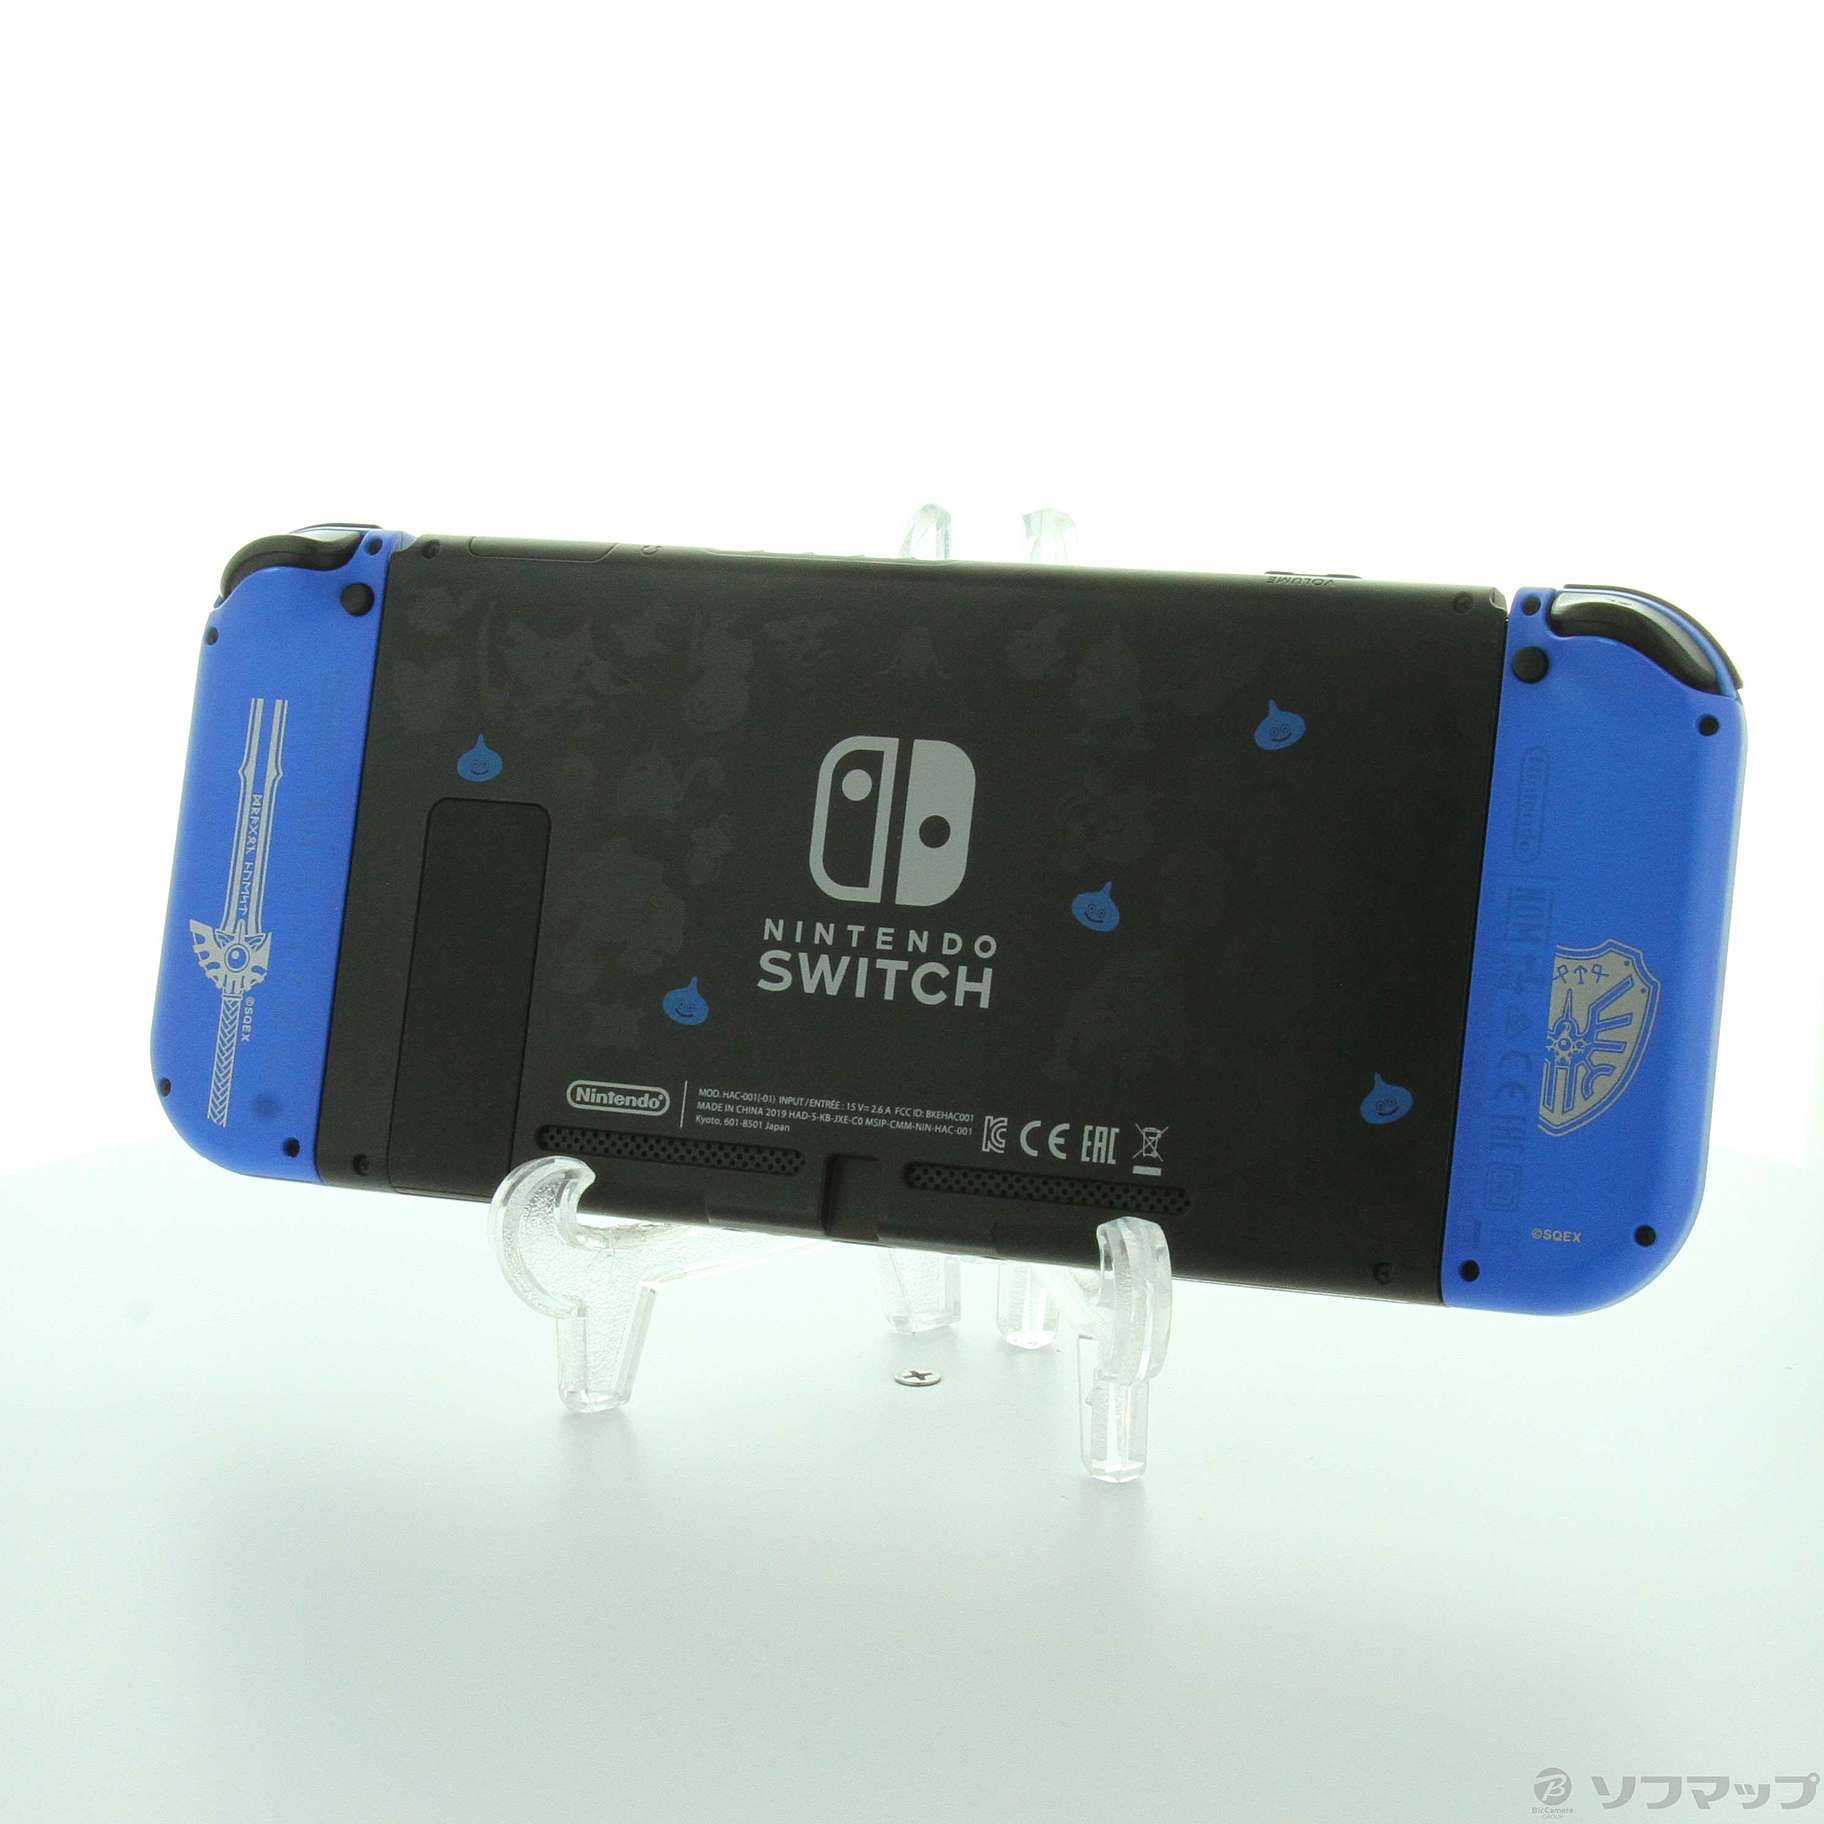 Nintendo Switch ドラゴンクエストXI S ロトエディション